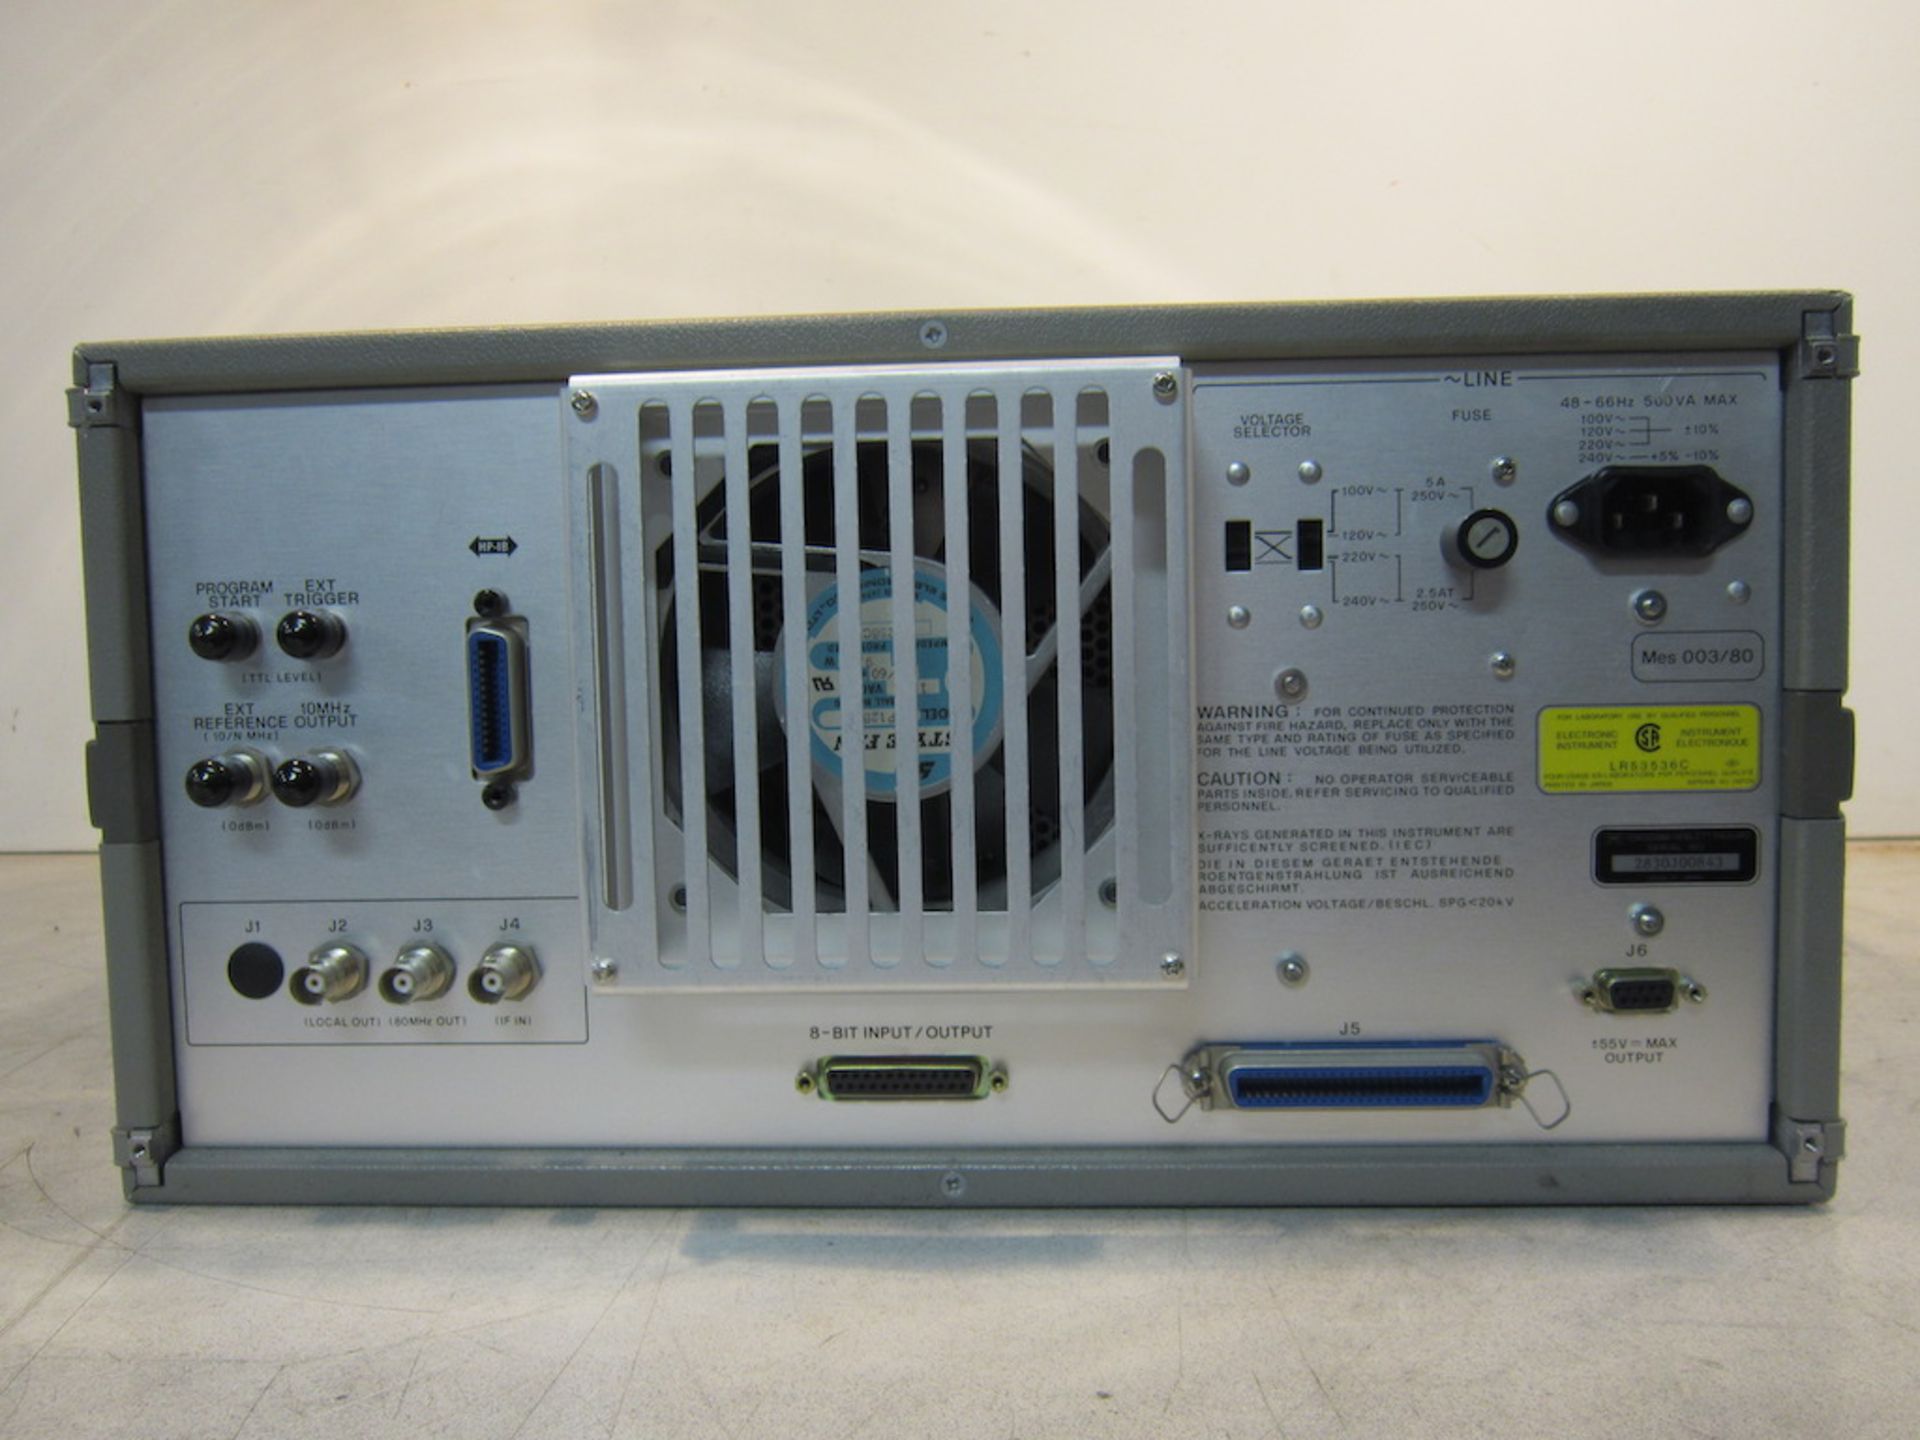 Lot Of 2 Hewlett-Packard 4195A 10Hz-500Mhz, Network / Spectrum Analyzer + Yokogawa Hewlett-Packer - Image 4 of 7